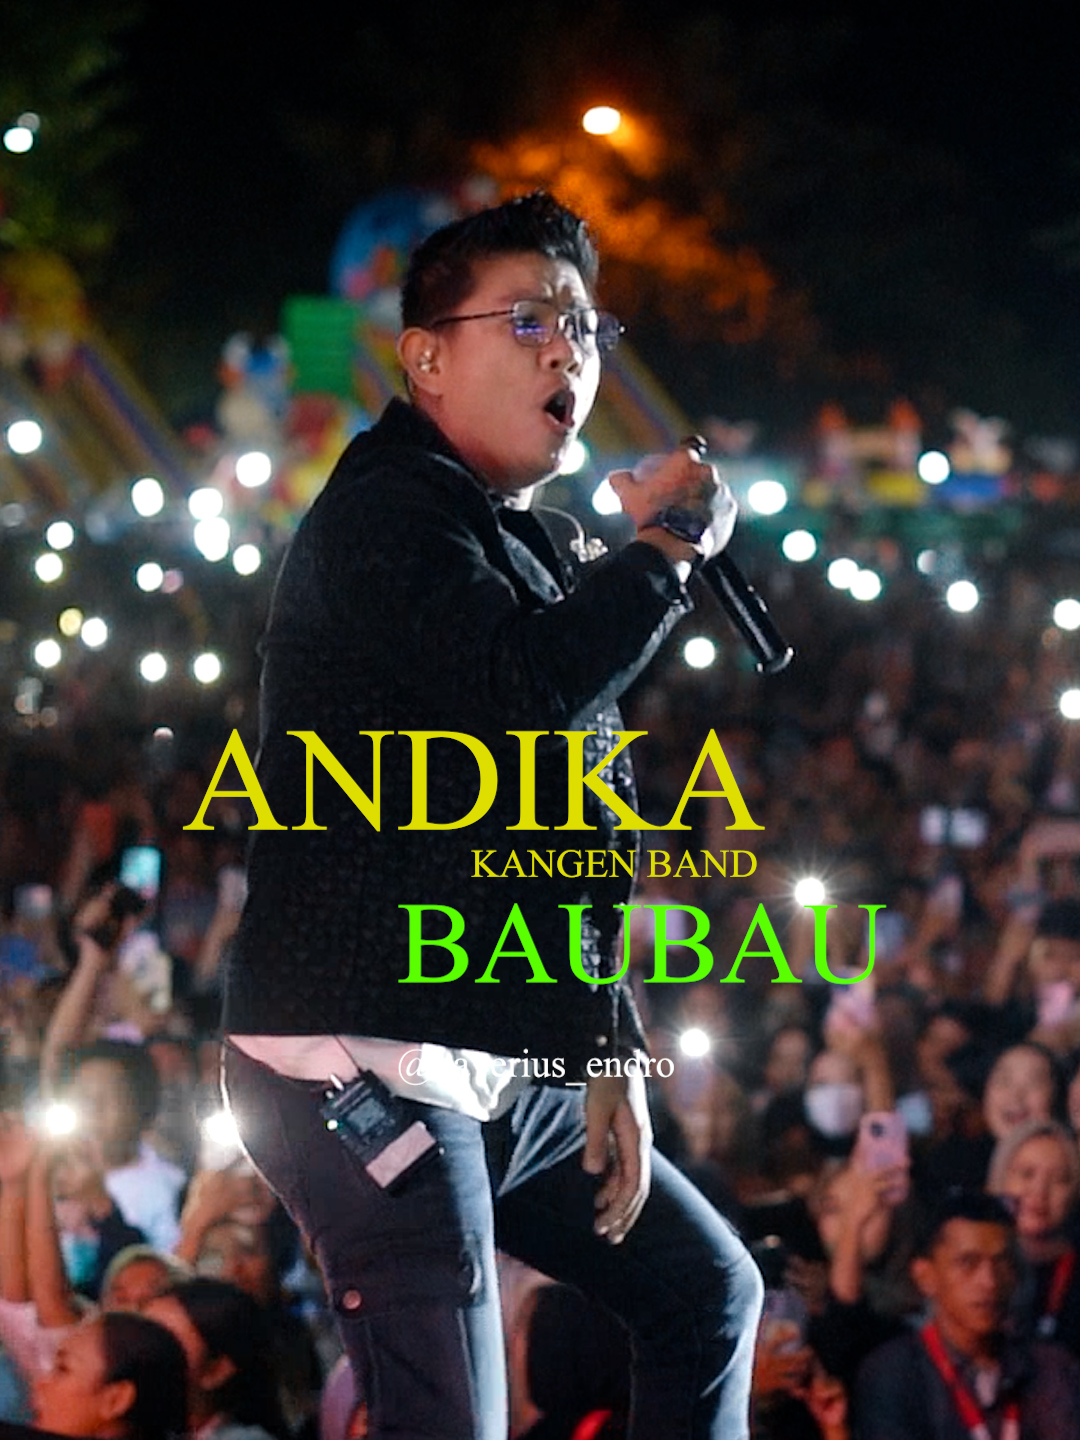 Andika Kangen Band hibur masyarakat Baubau #kangenband #konser #andikakangenband #baubau #baubautiktok #baubauhits #baubausulawesitenggara #fyp 